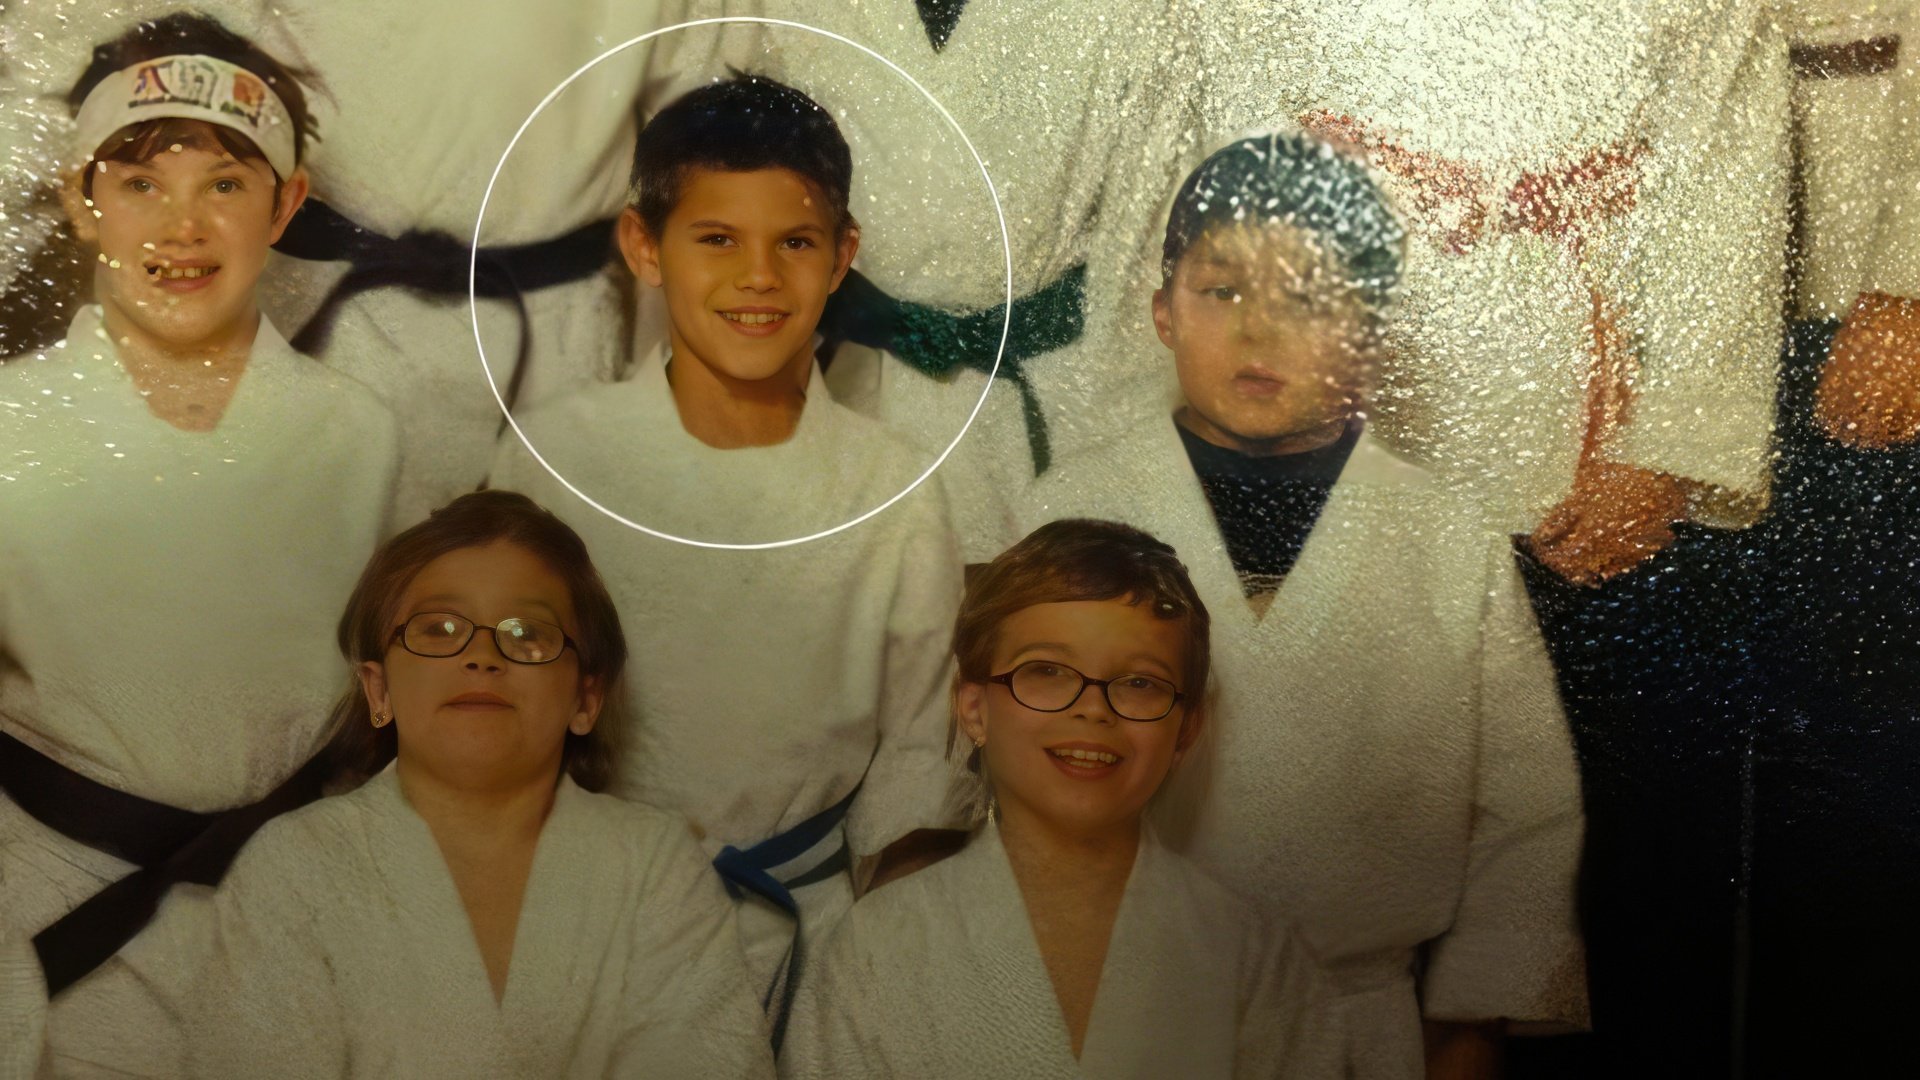 Taylor Lautner practiced karate since his childhood